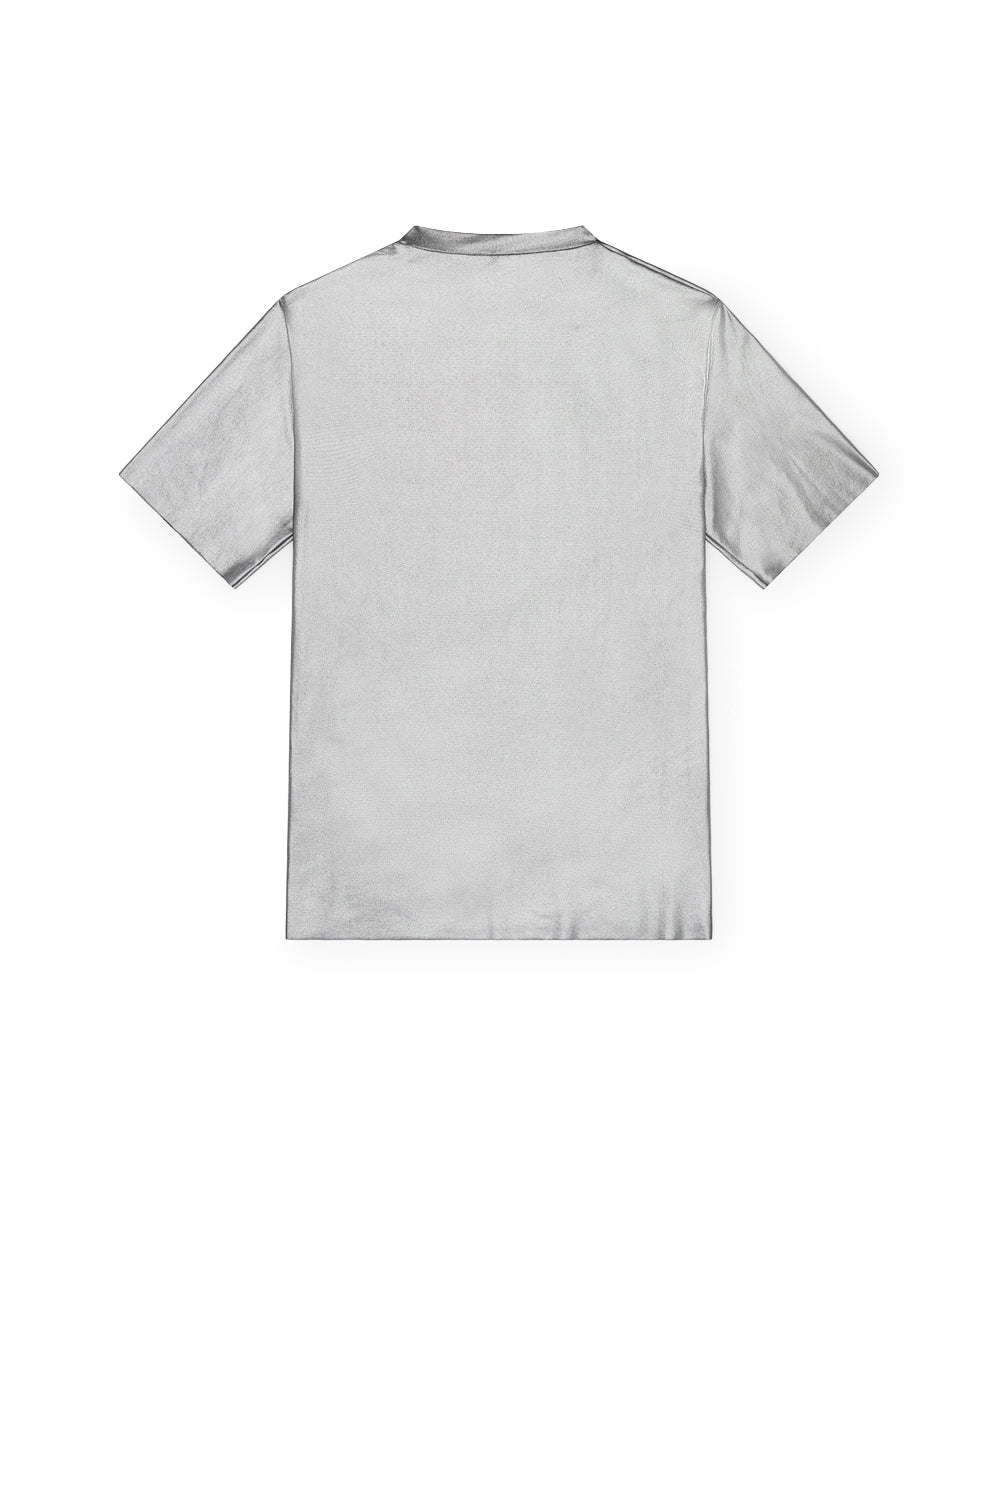 Little Creative Factory Long T-Shirt - Soft Futuristic